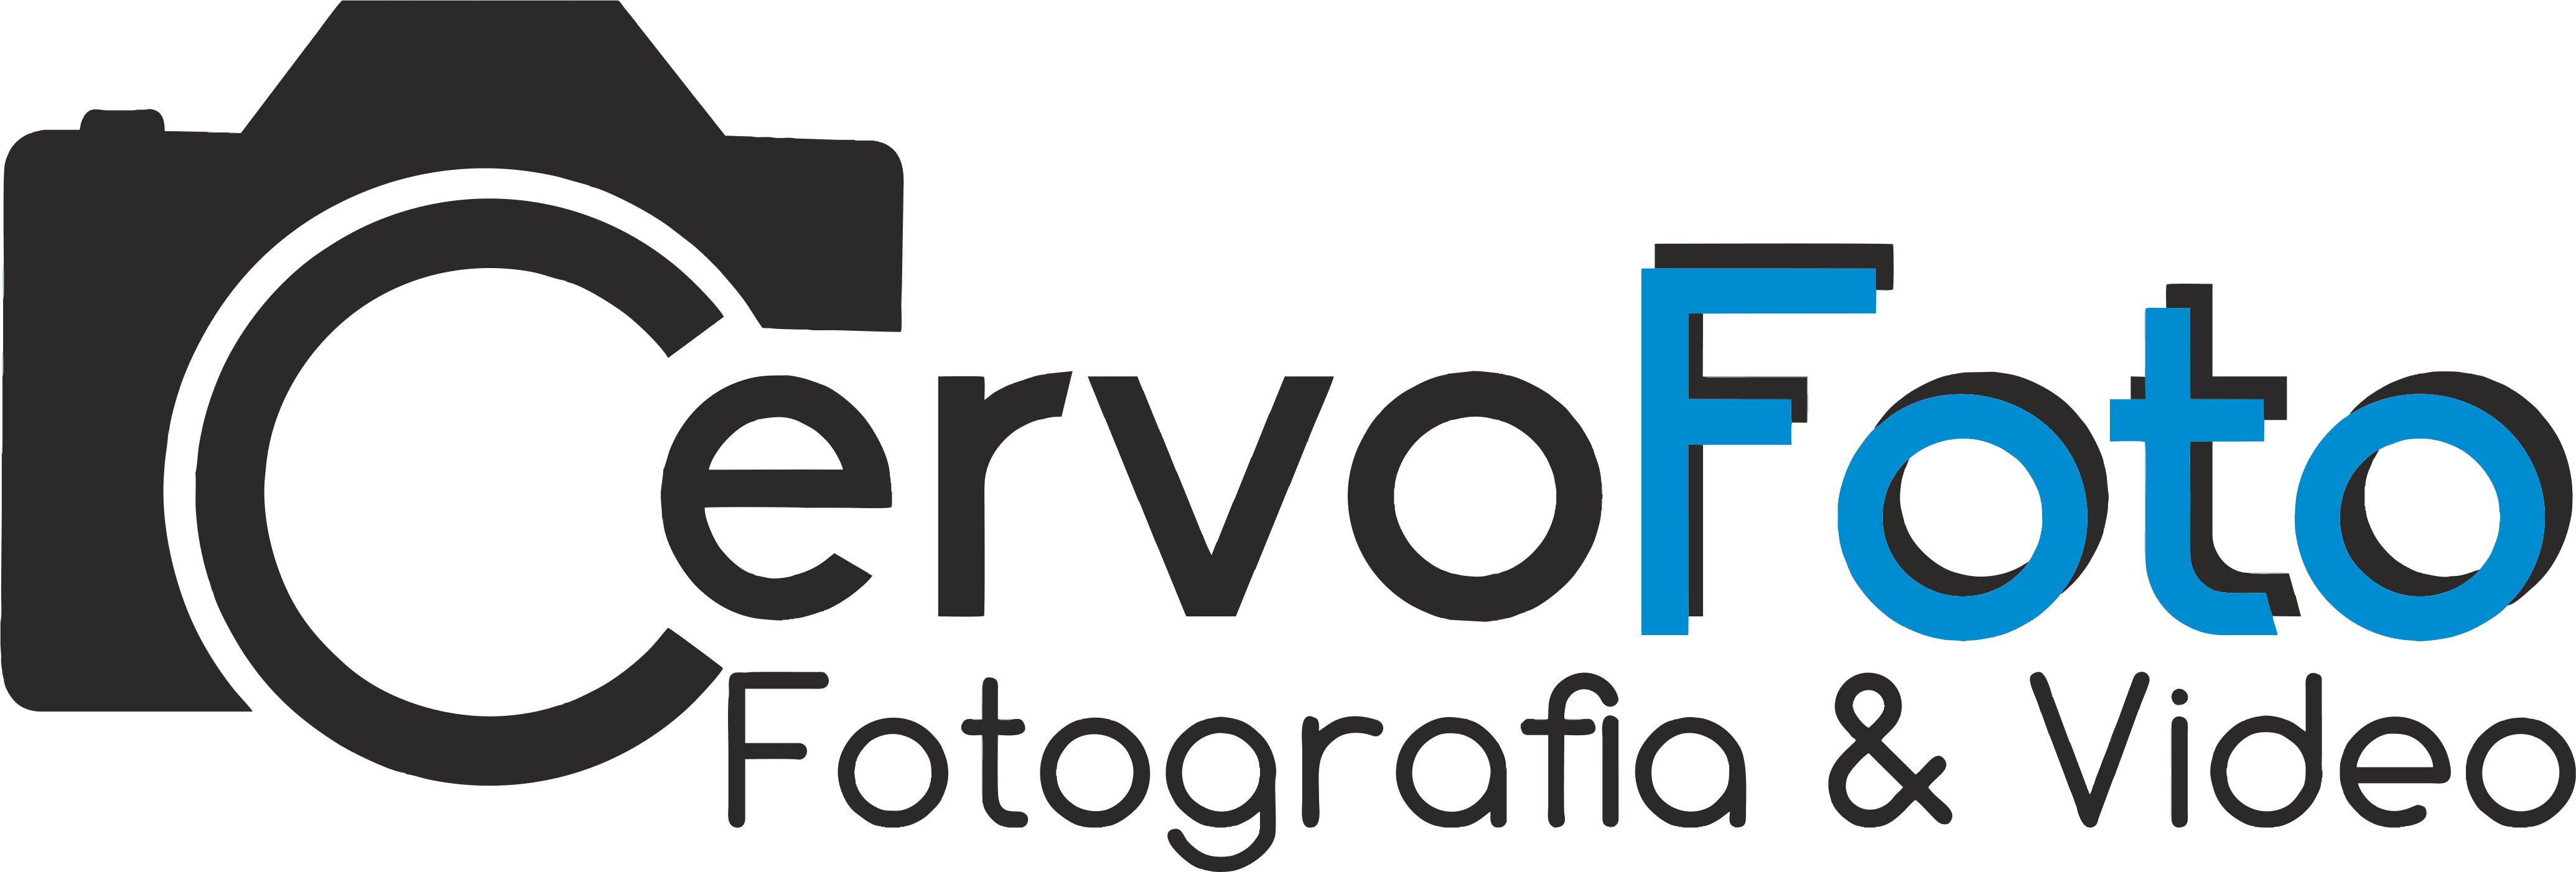 CervoFoto Fotografía Digital